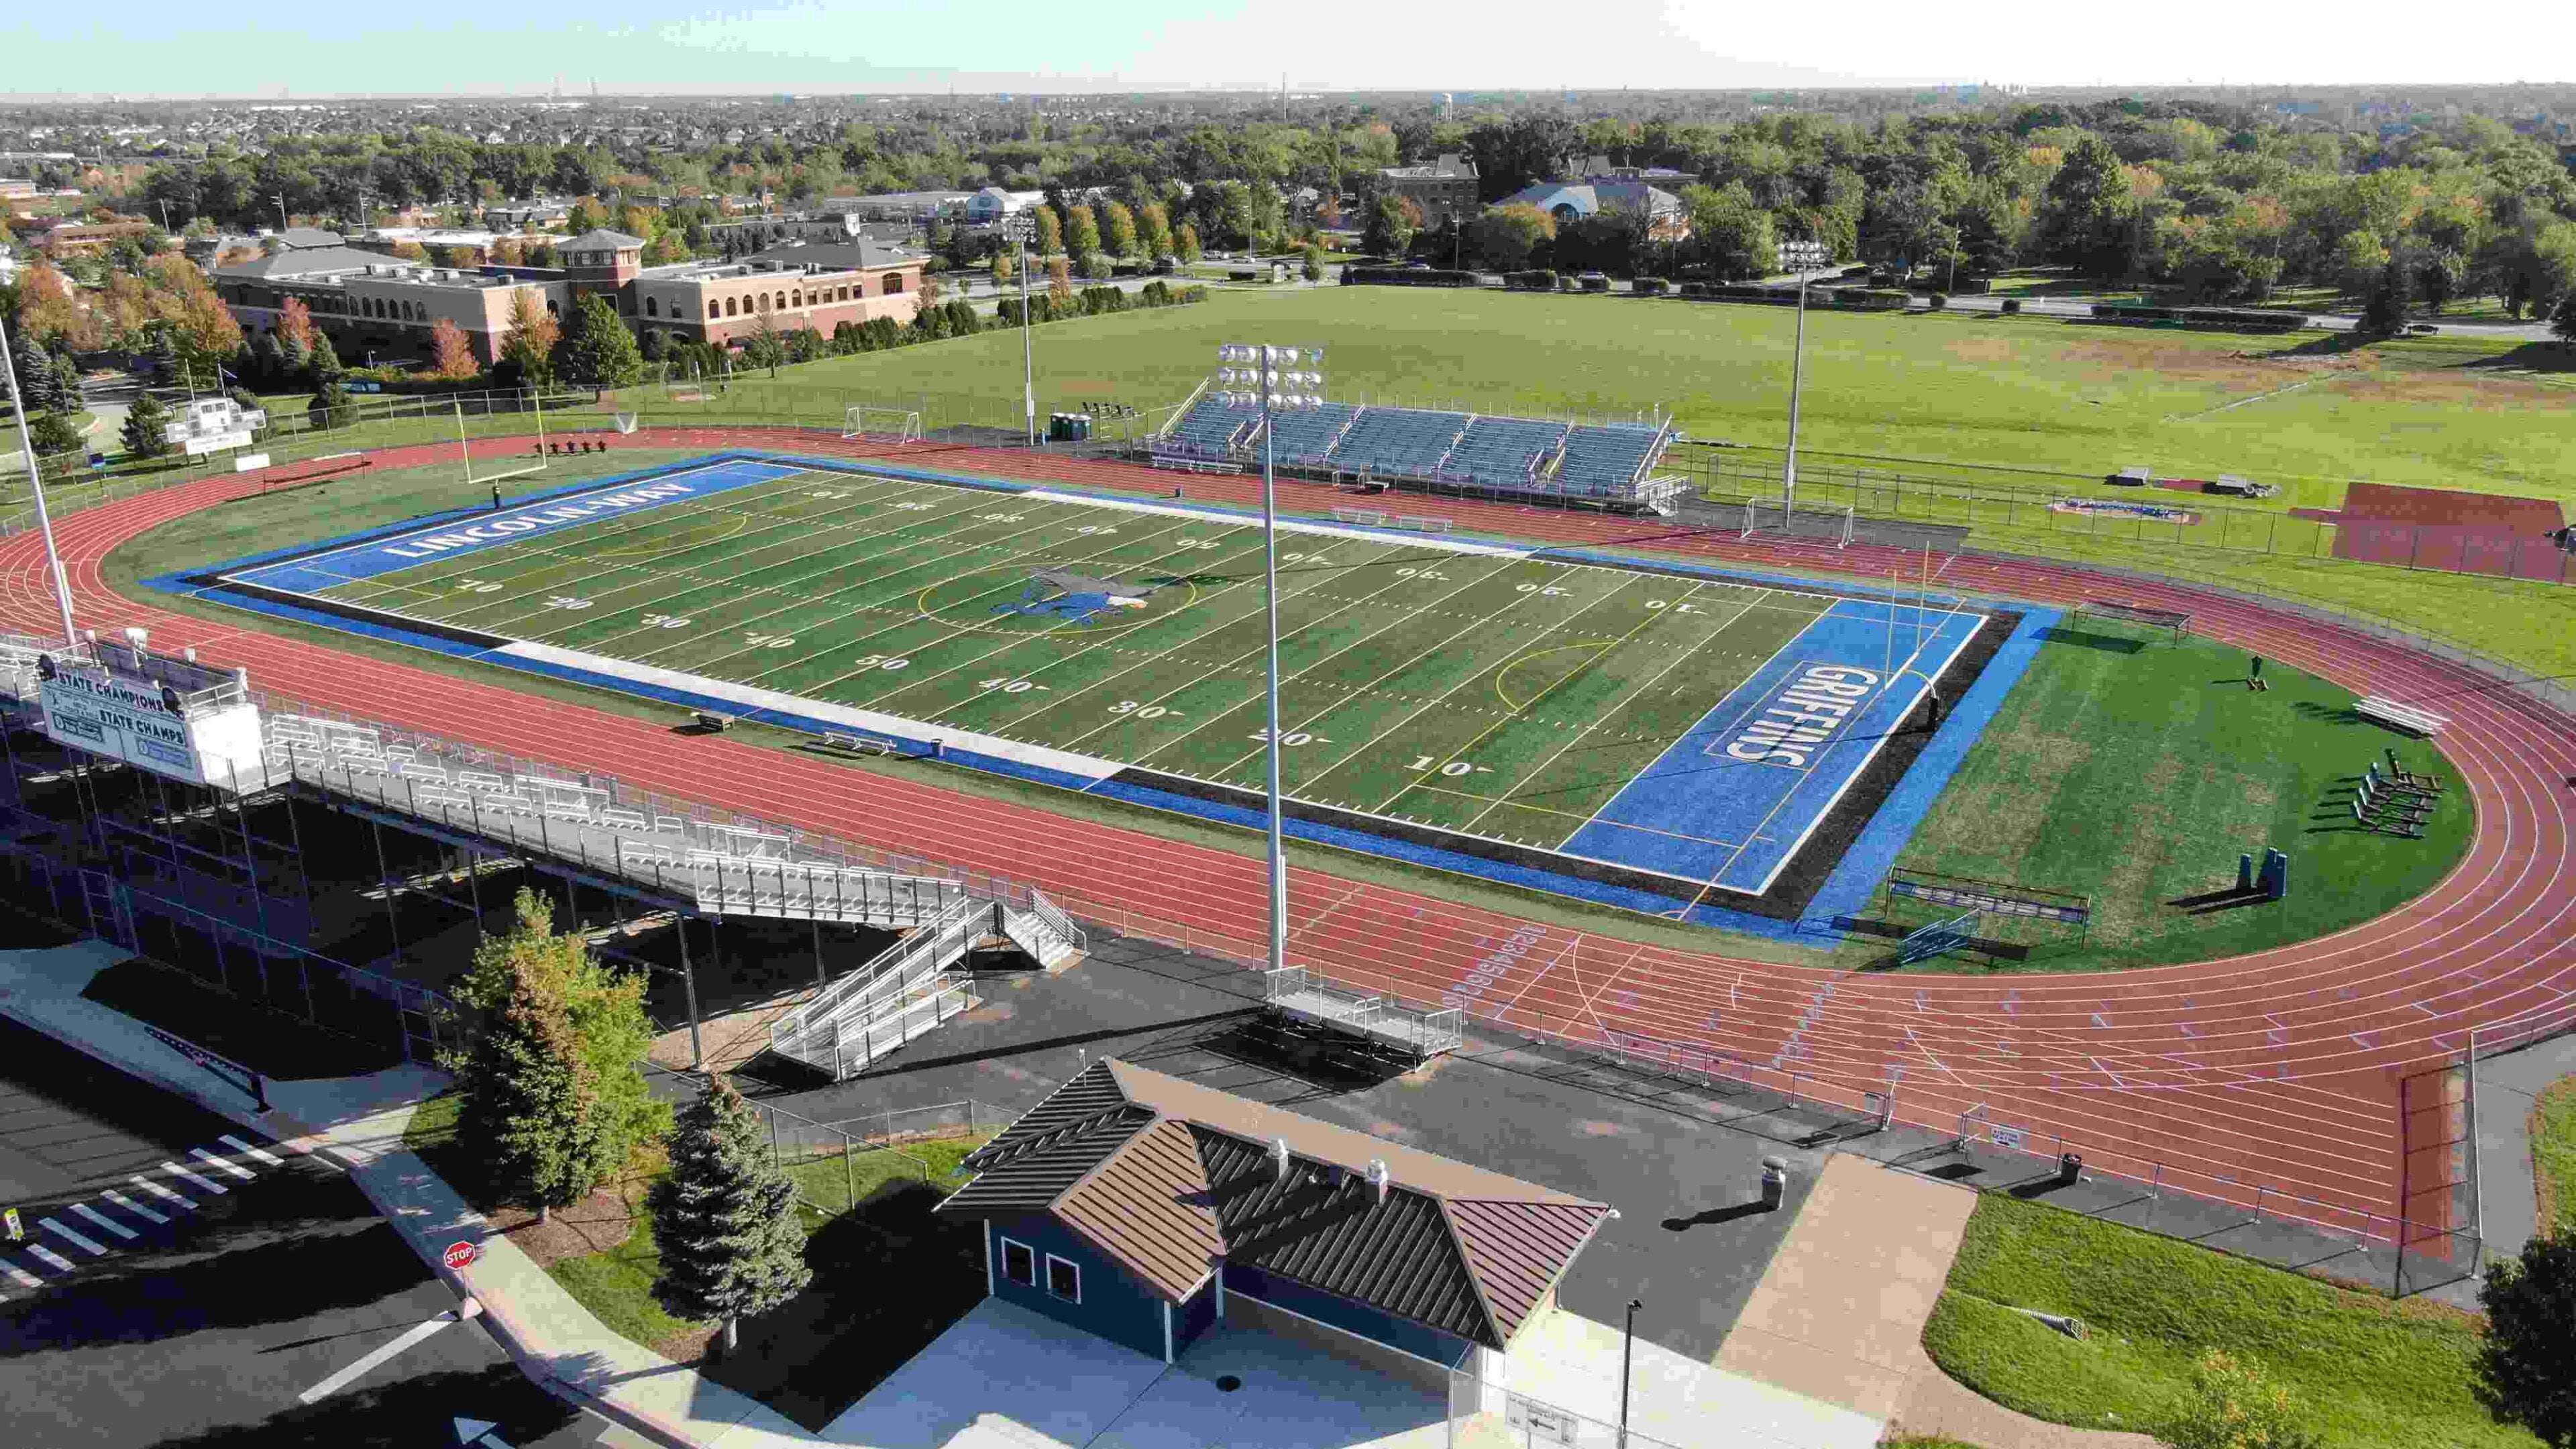 Illinois high school football stadium, home to Lincoln-Way East